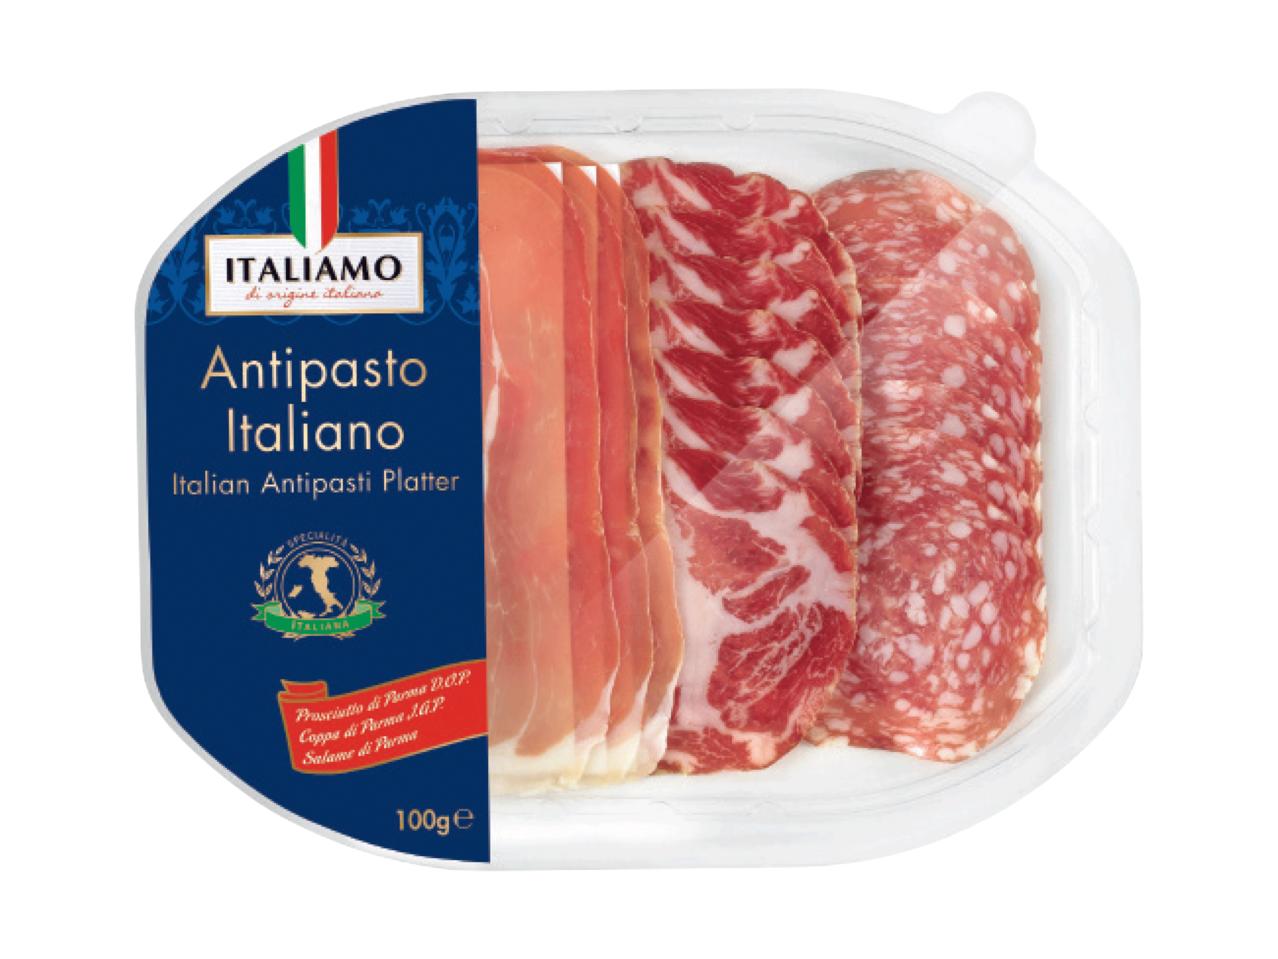 ITALIAMO Italian Antipasti Platter